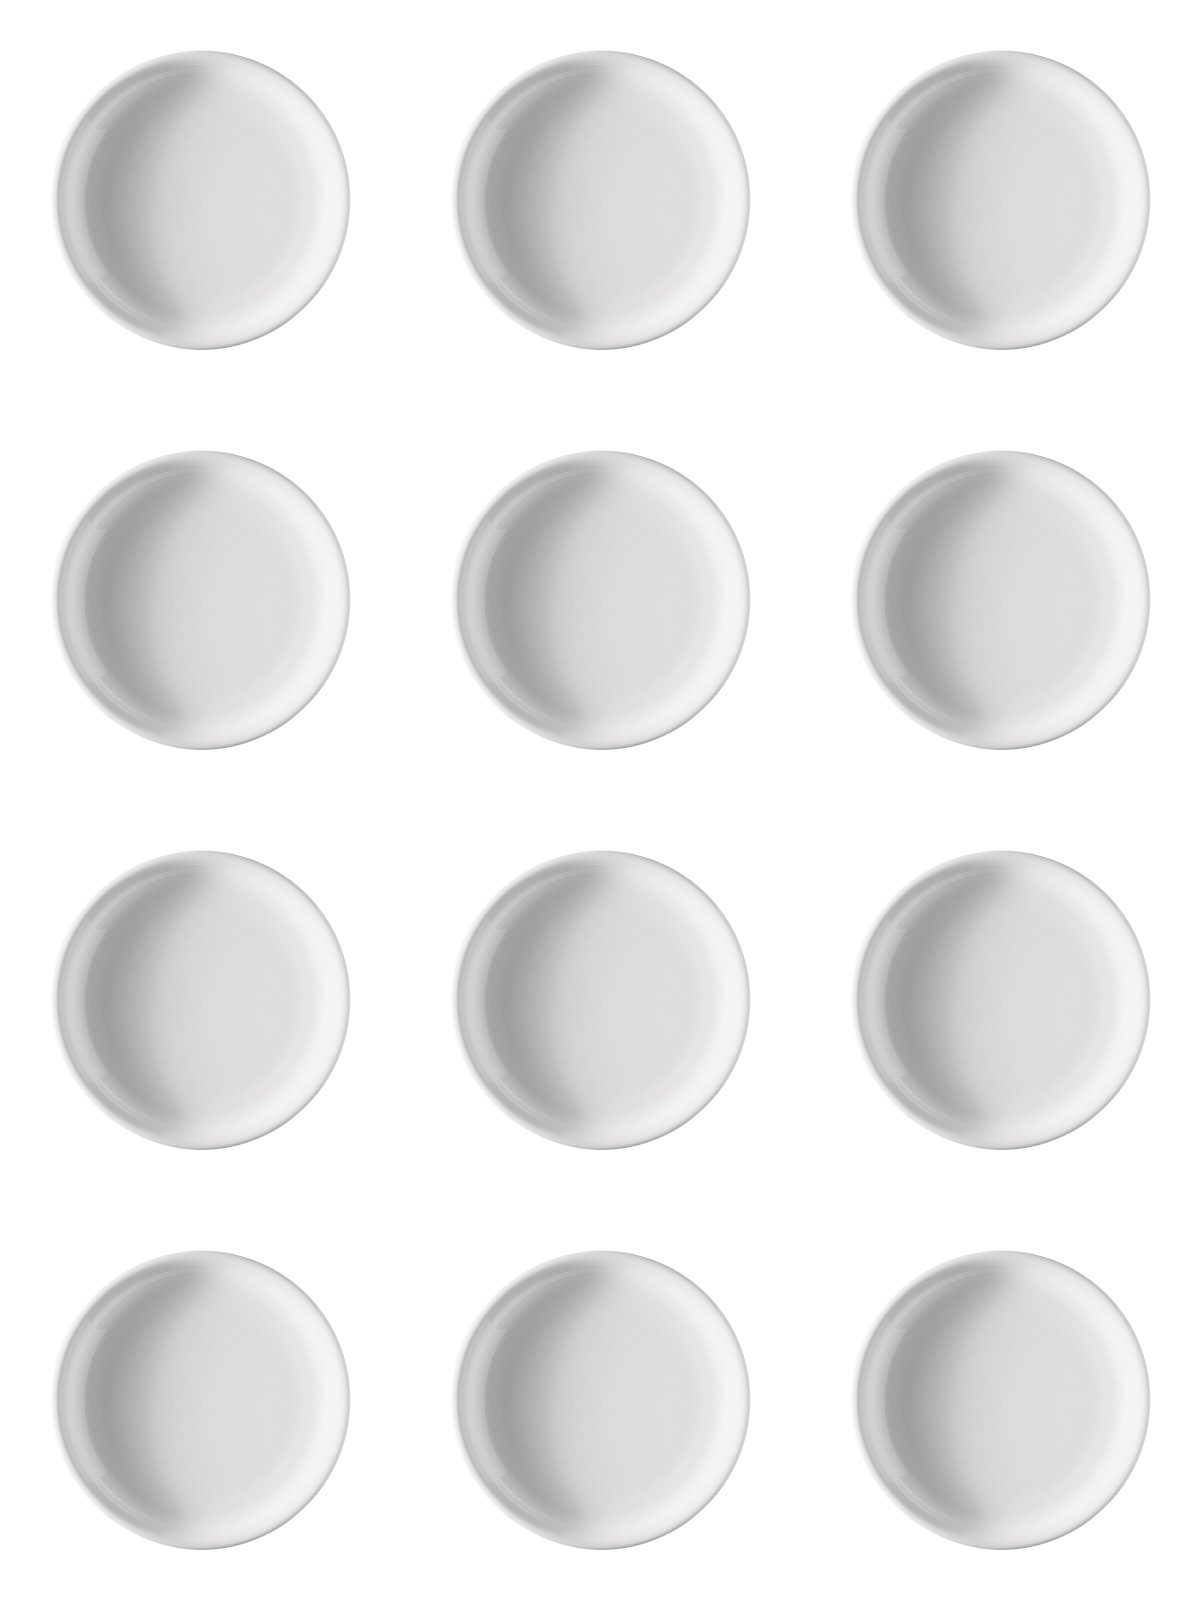 Thomas Porzellan Frühstücksteller Frühstücksteller 20 cm - TREND Weiß - 12 Stück, (12 St), Porzellan, spülmaschinenfest und mikrowellengeeignet